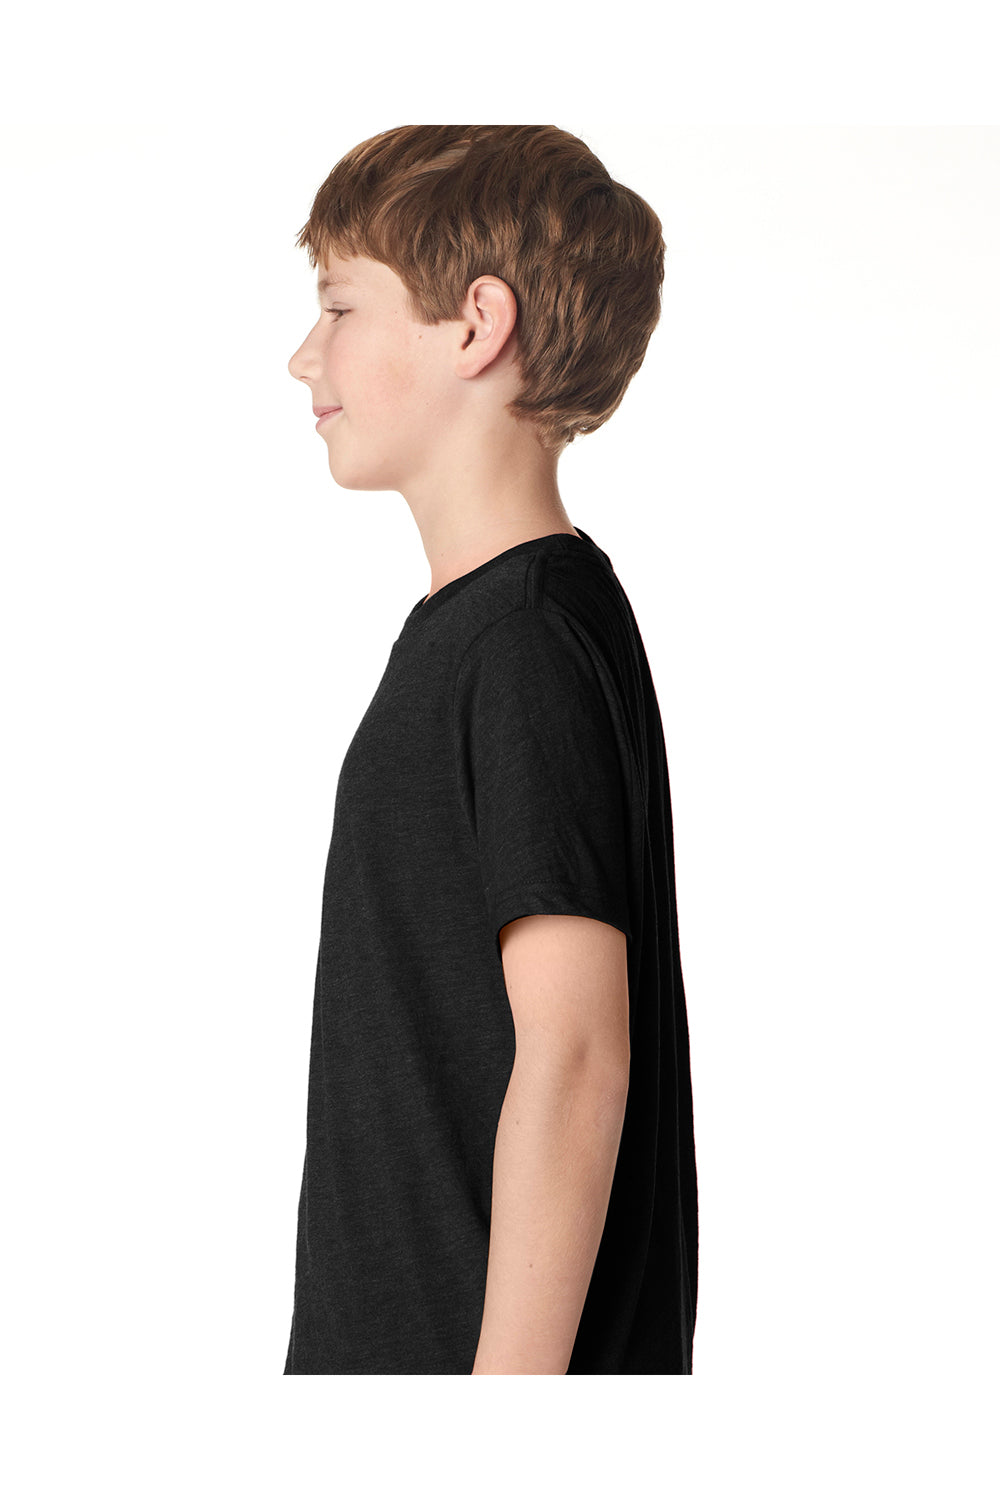 Next Level N6310 Youth Jersey Short Sleeve Crewneck T-Shirt Black Side